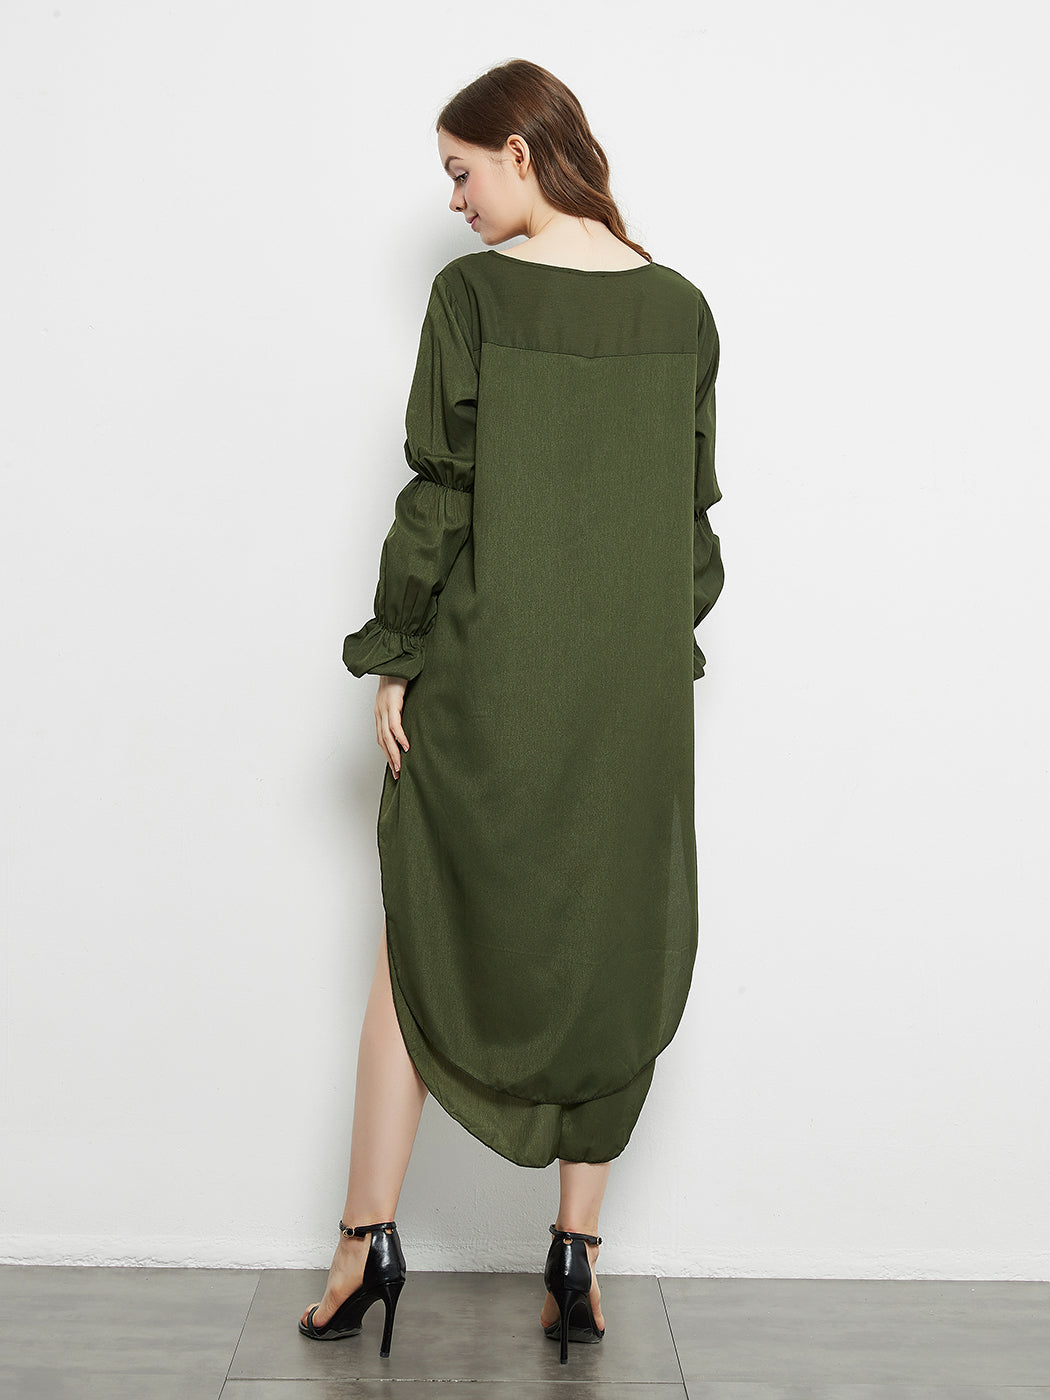 Lantern Long Sleeve Tops High-Low Hem Tunic Round Neck Asymmetrical Irregular Hem Casual Blouse Shirt Dress